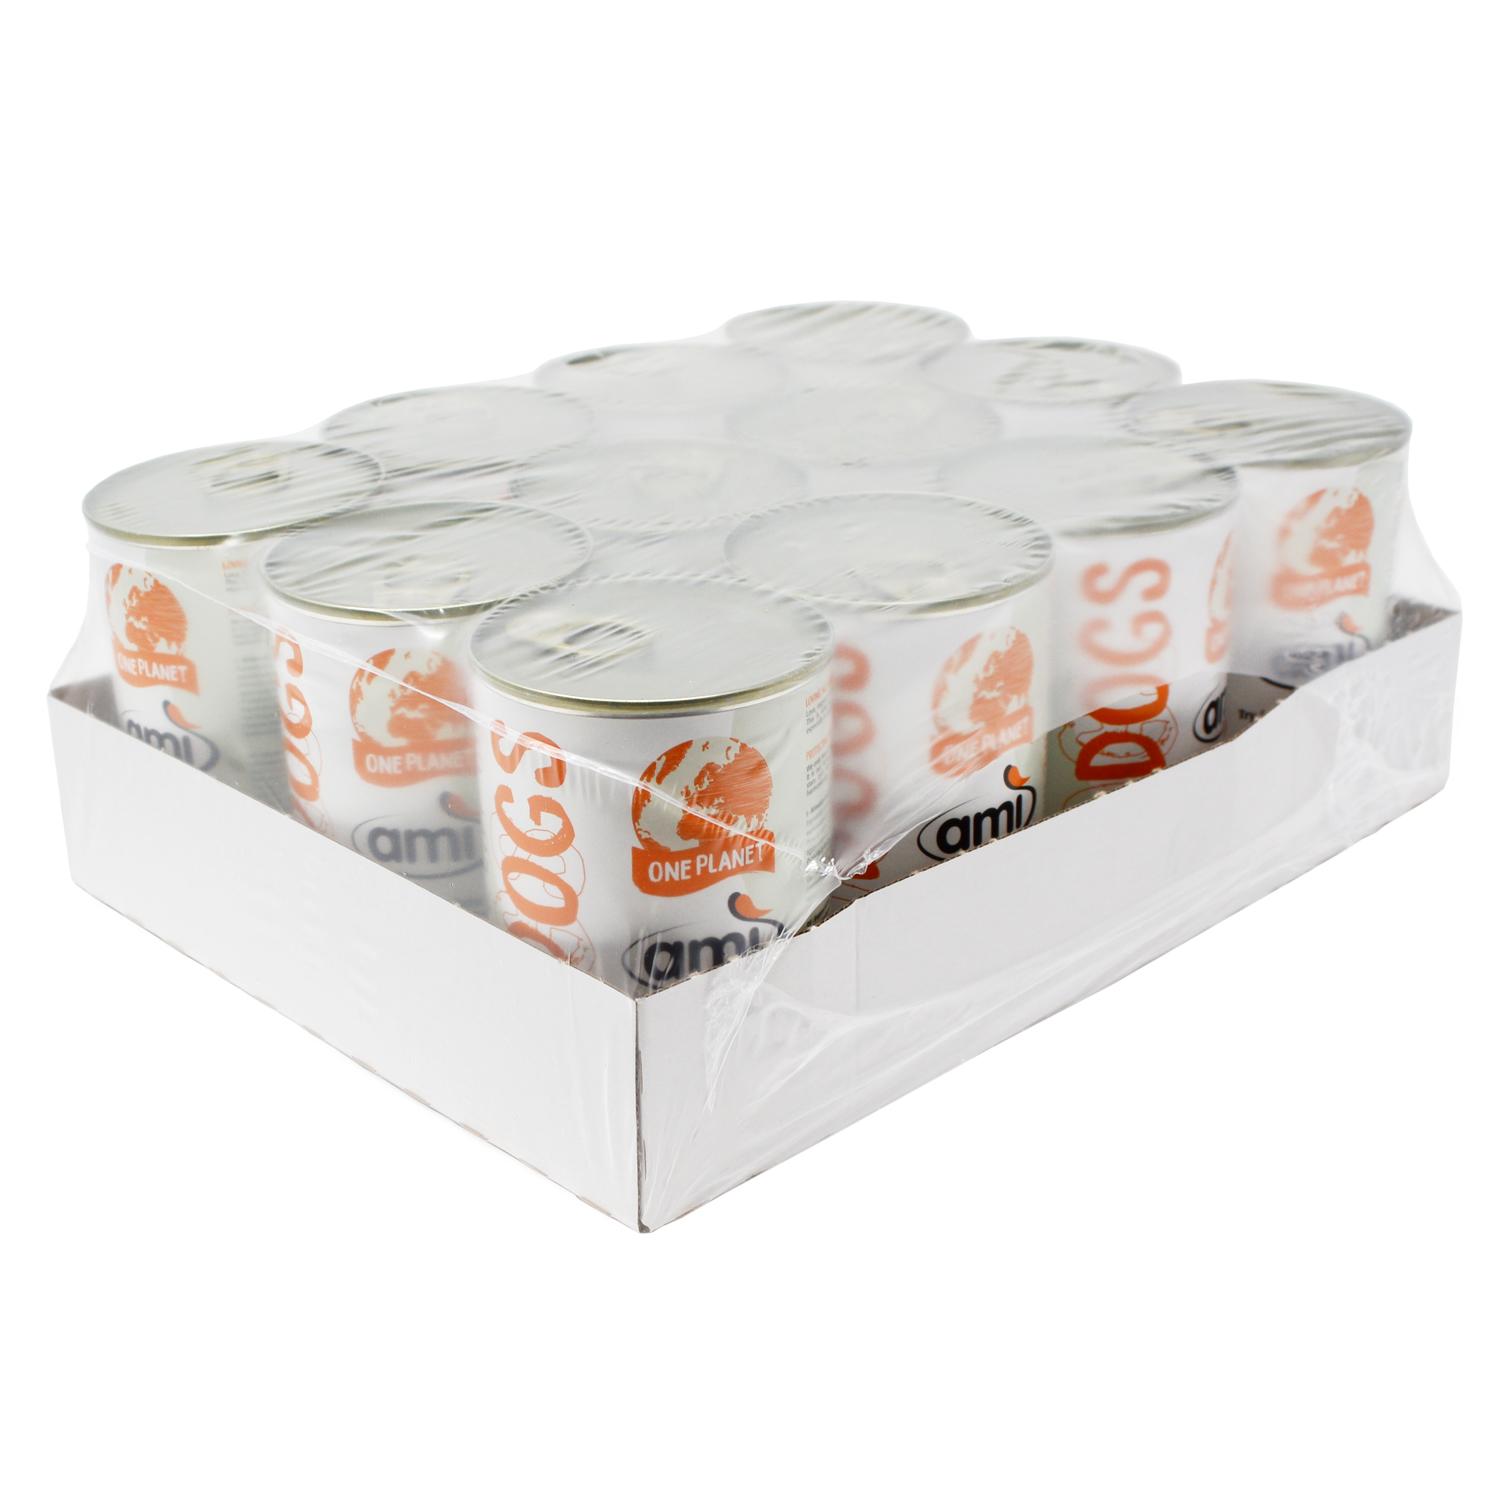 A bulk case of Ami Orange Wet Vegan Canned Dog Food